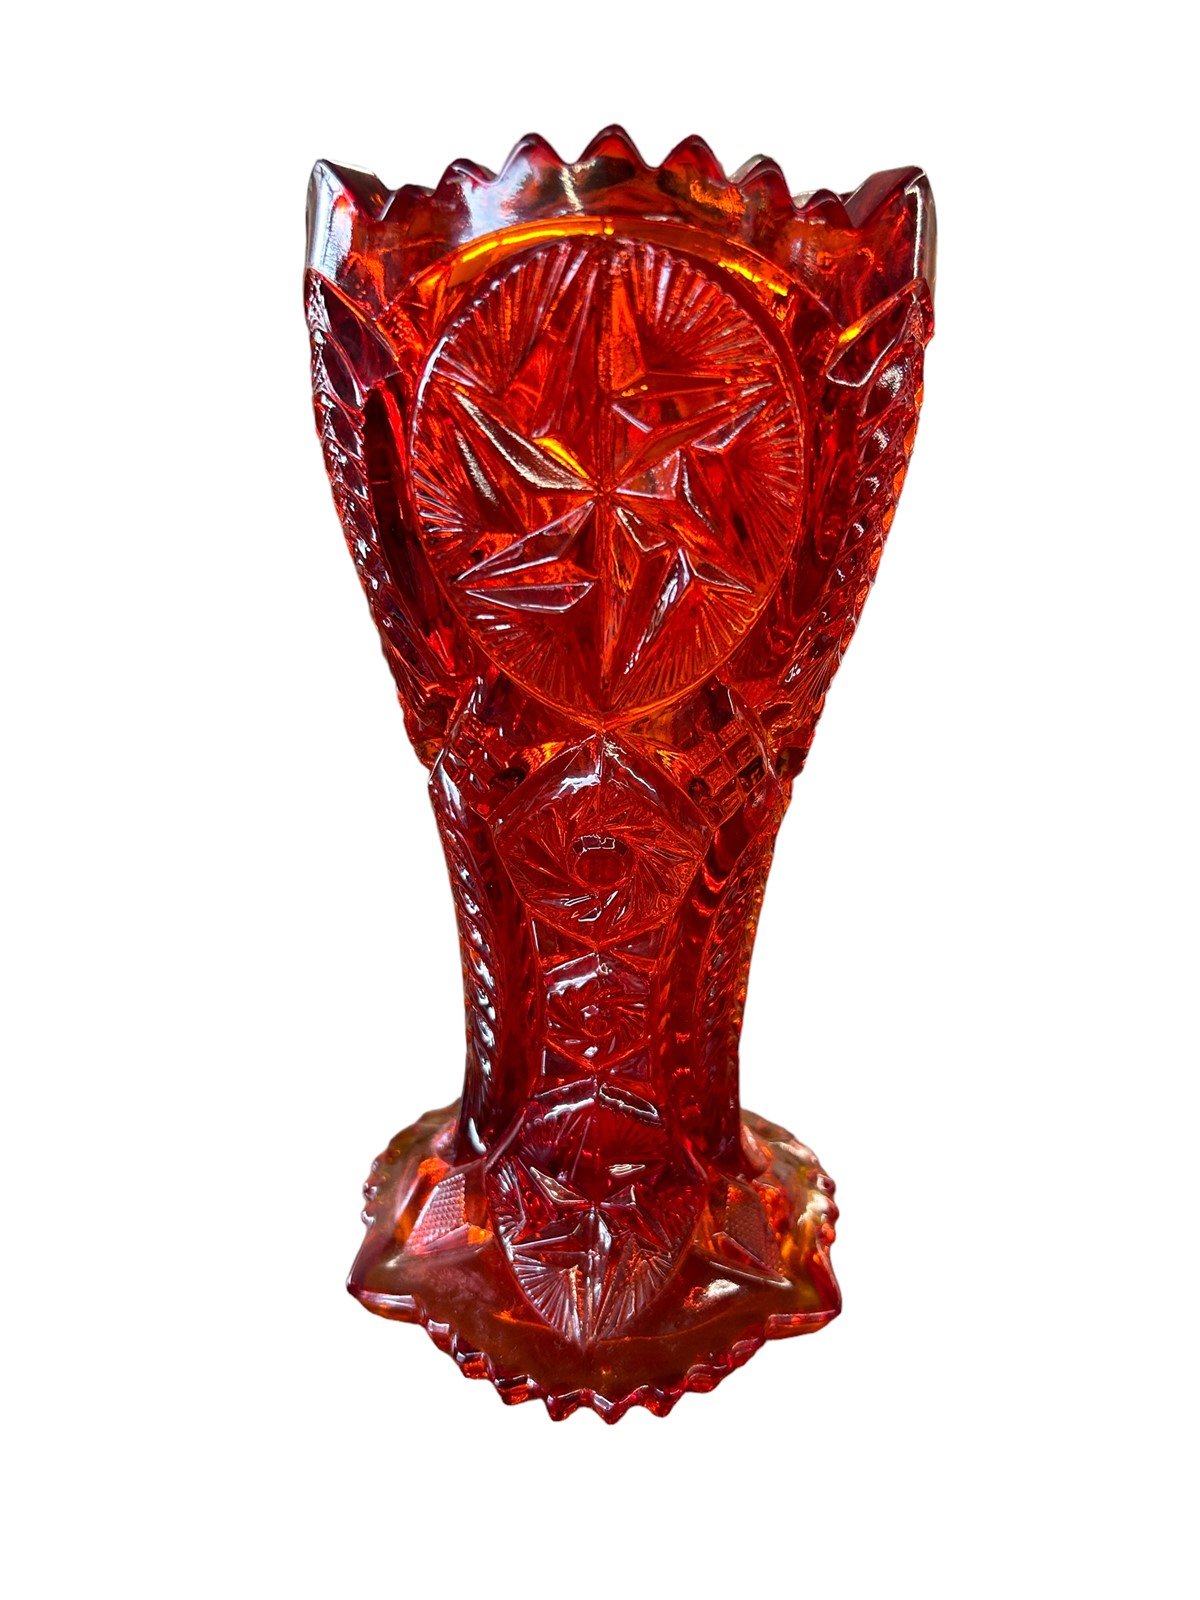 Nortec Vase L.E. Smith Amberina Glass Red Orange Amber 1900's Iridescent Star